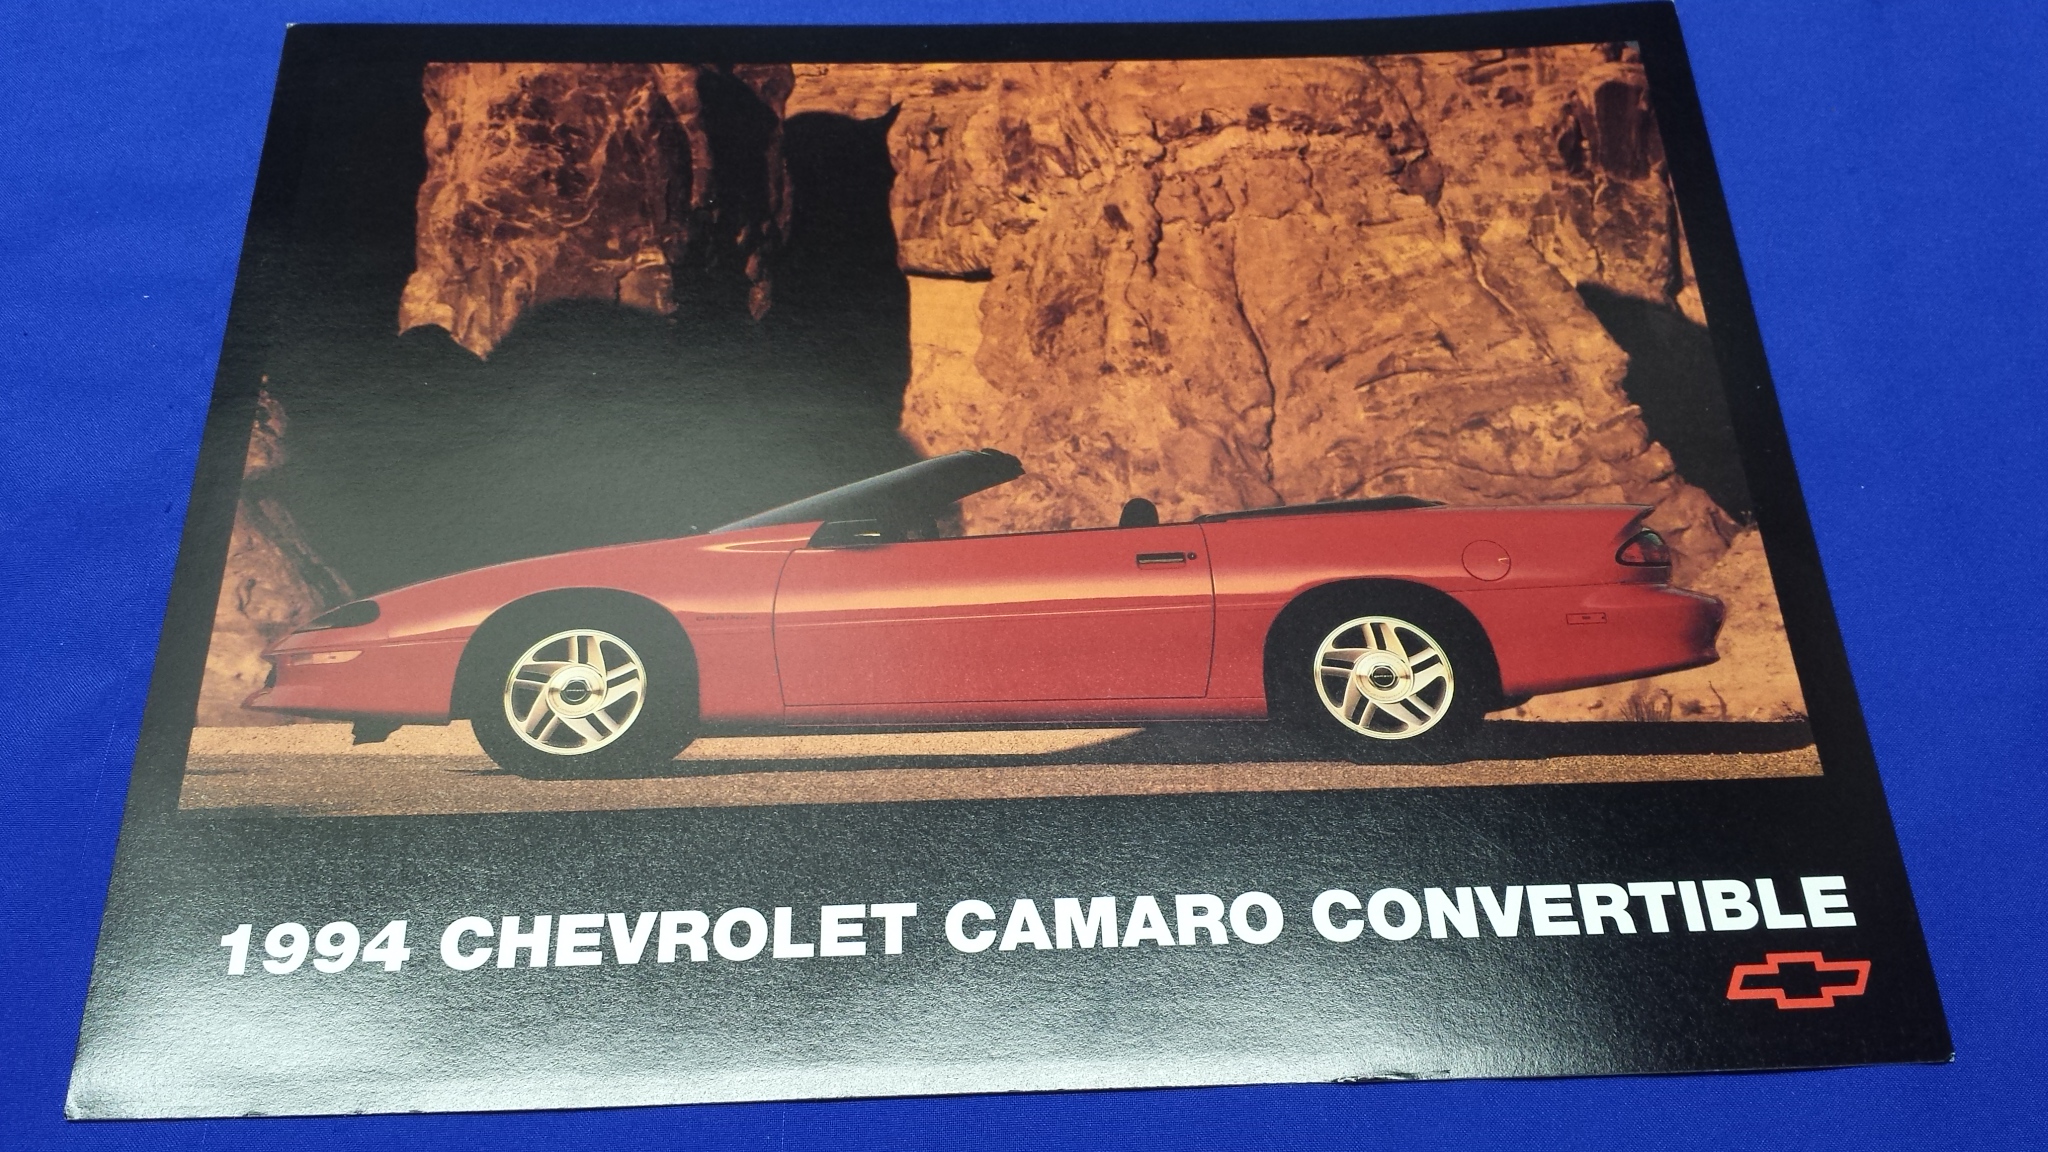 1994 Chevy Camaro Convertible Mini Poster Info Card - Click Image to Close